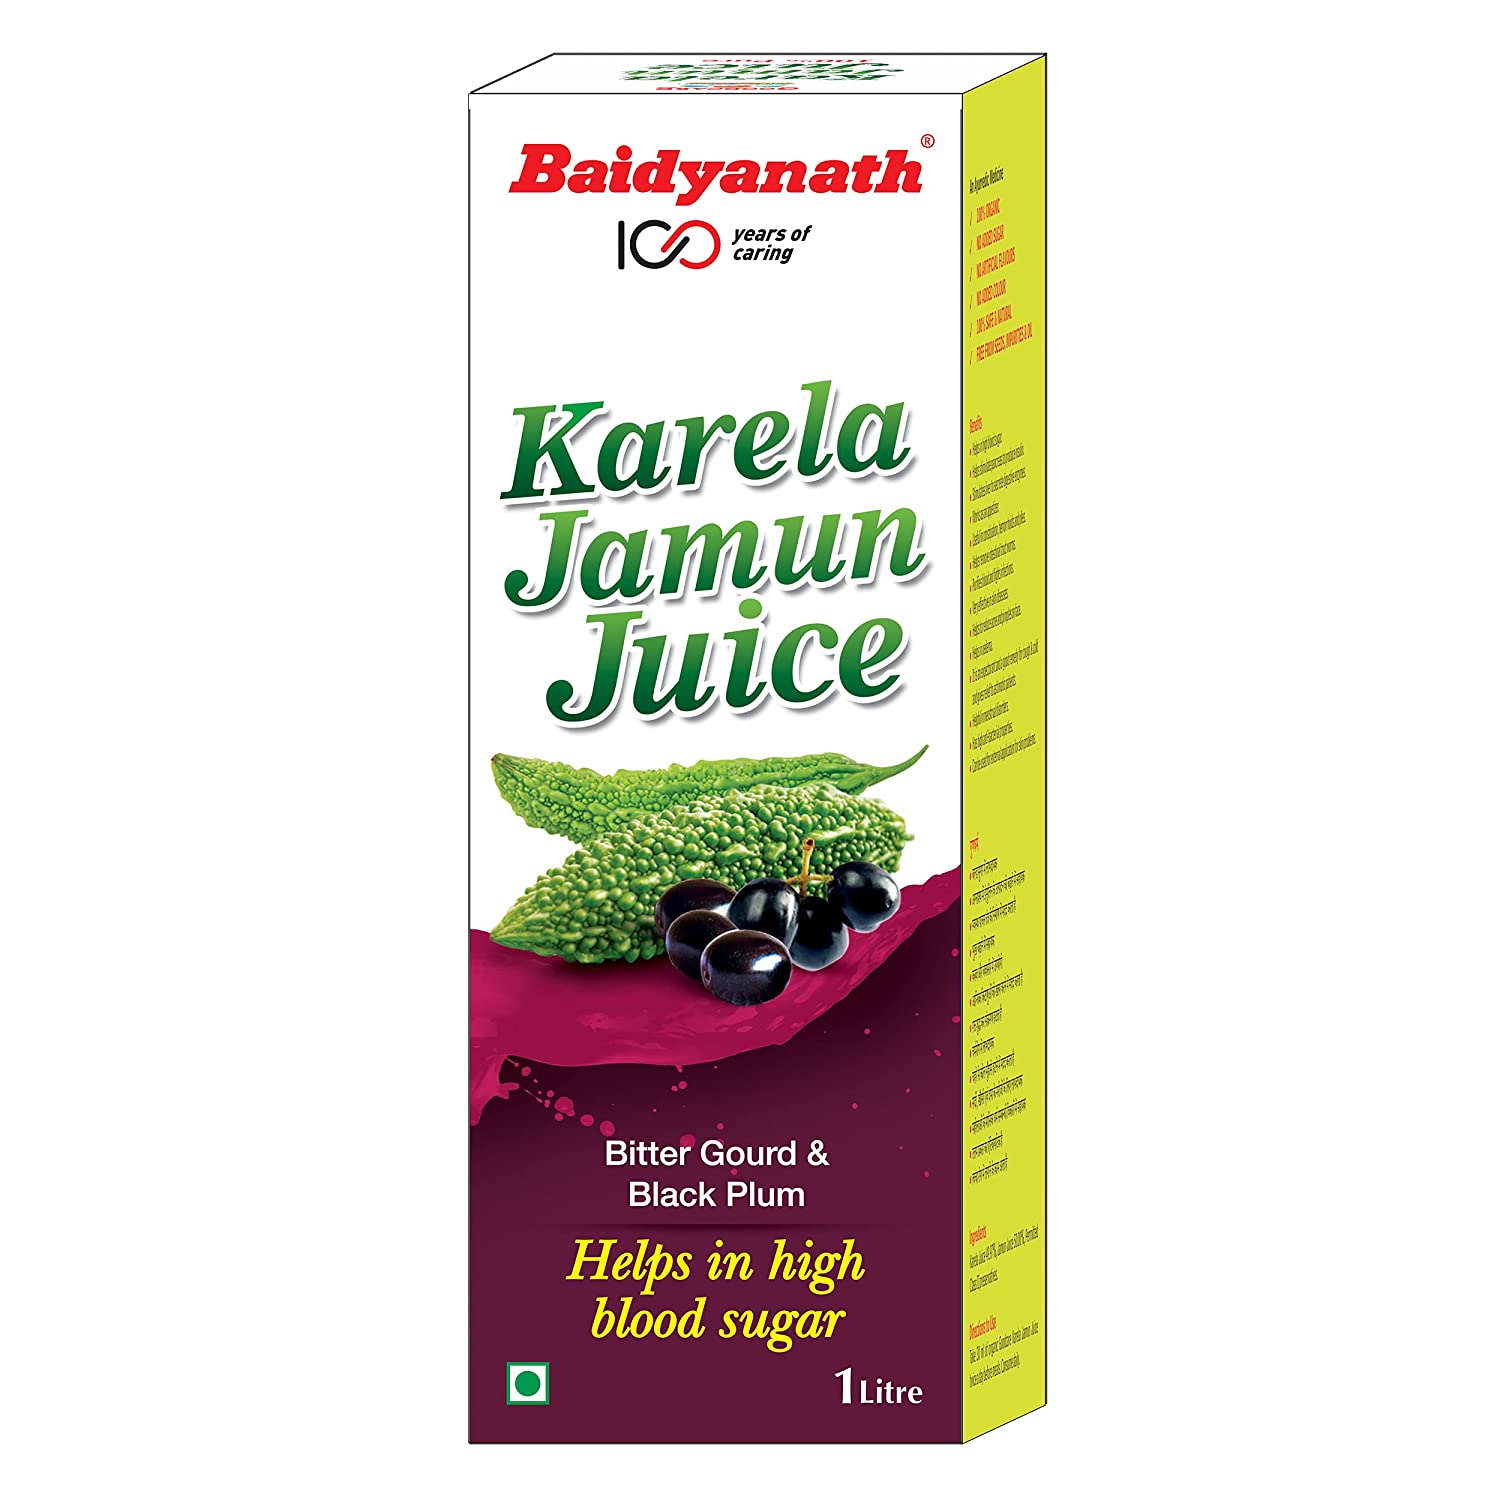 Baidyanath Karela Jamun Juice Image